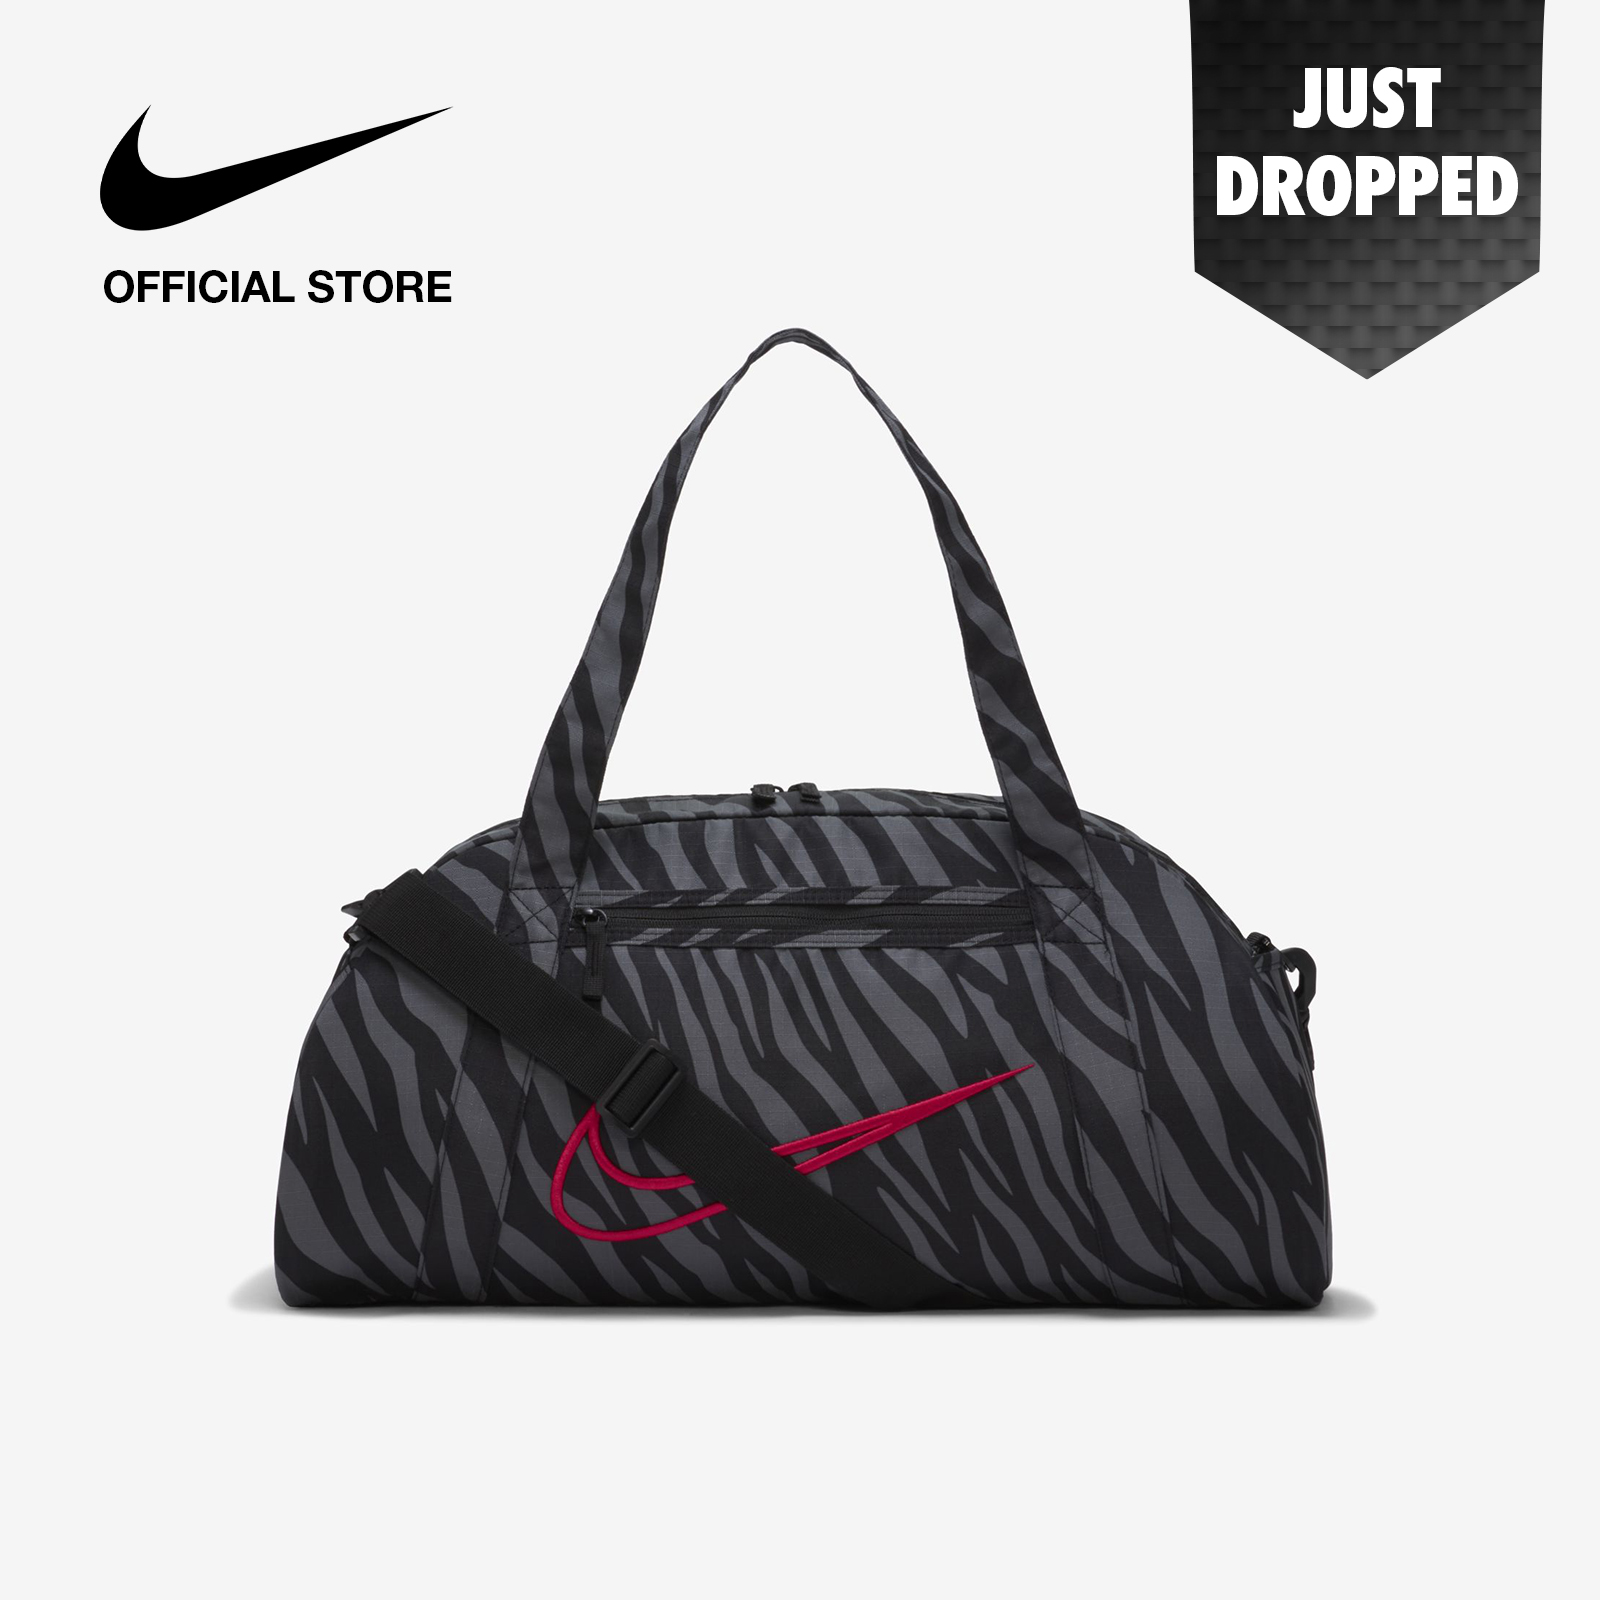 Nike Women's Gym Club Printed Training Duffel Bag - Black ไนกี้ กระเป๋าเทรนนิ่งดัฟเฟลผู้หญิงแบบพิมพ์ลาย ยิม คลับ - สีดำ